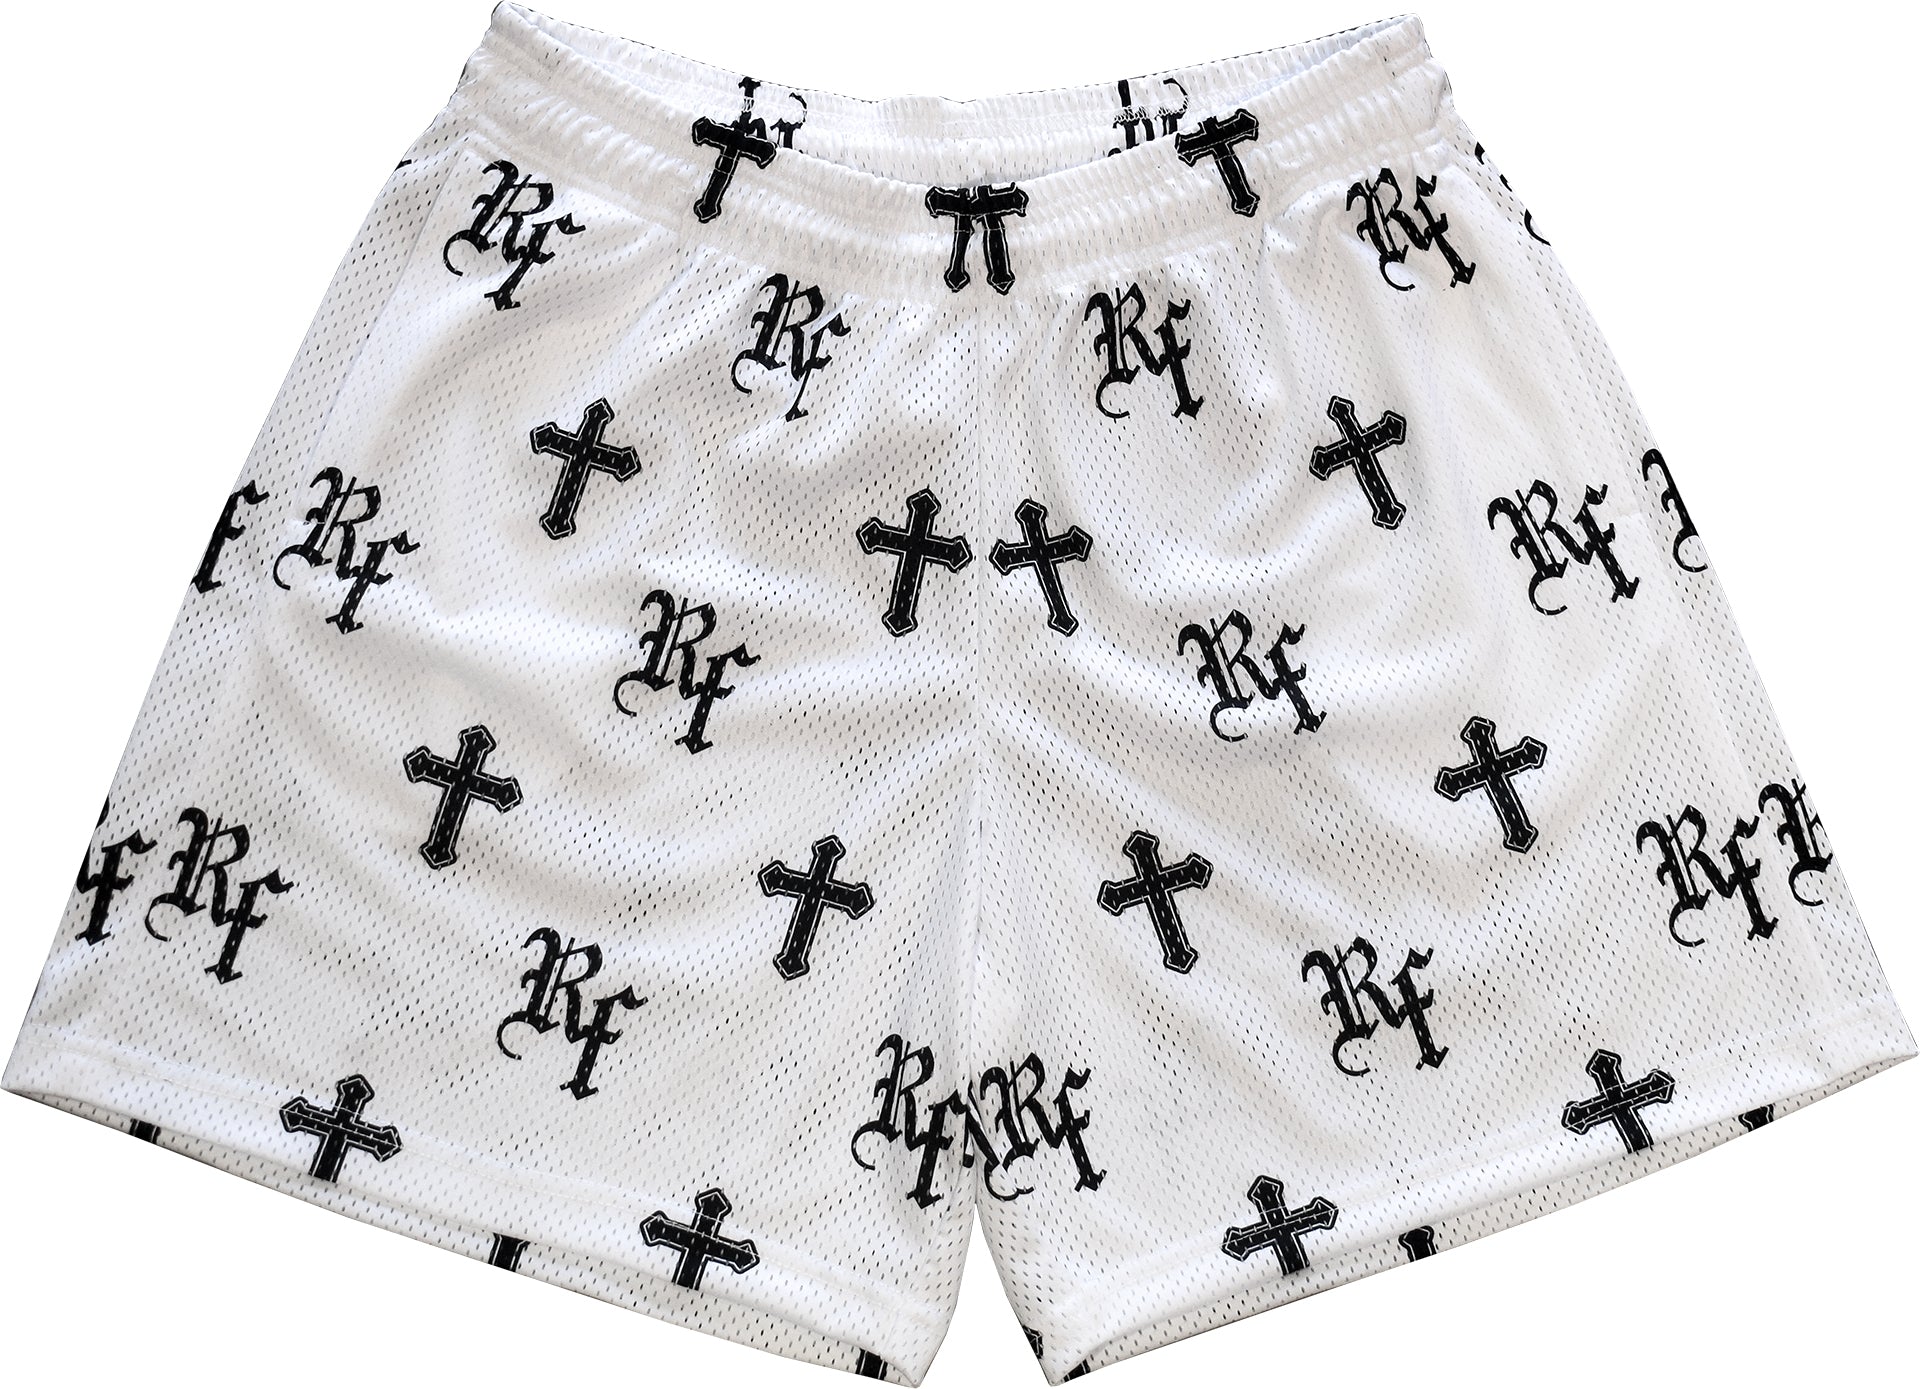 RF Mesh Cross Shorts - White